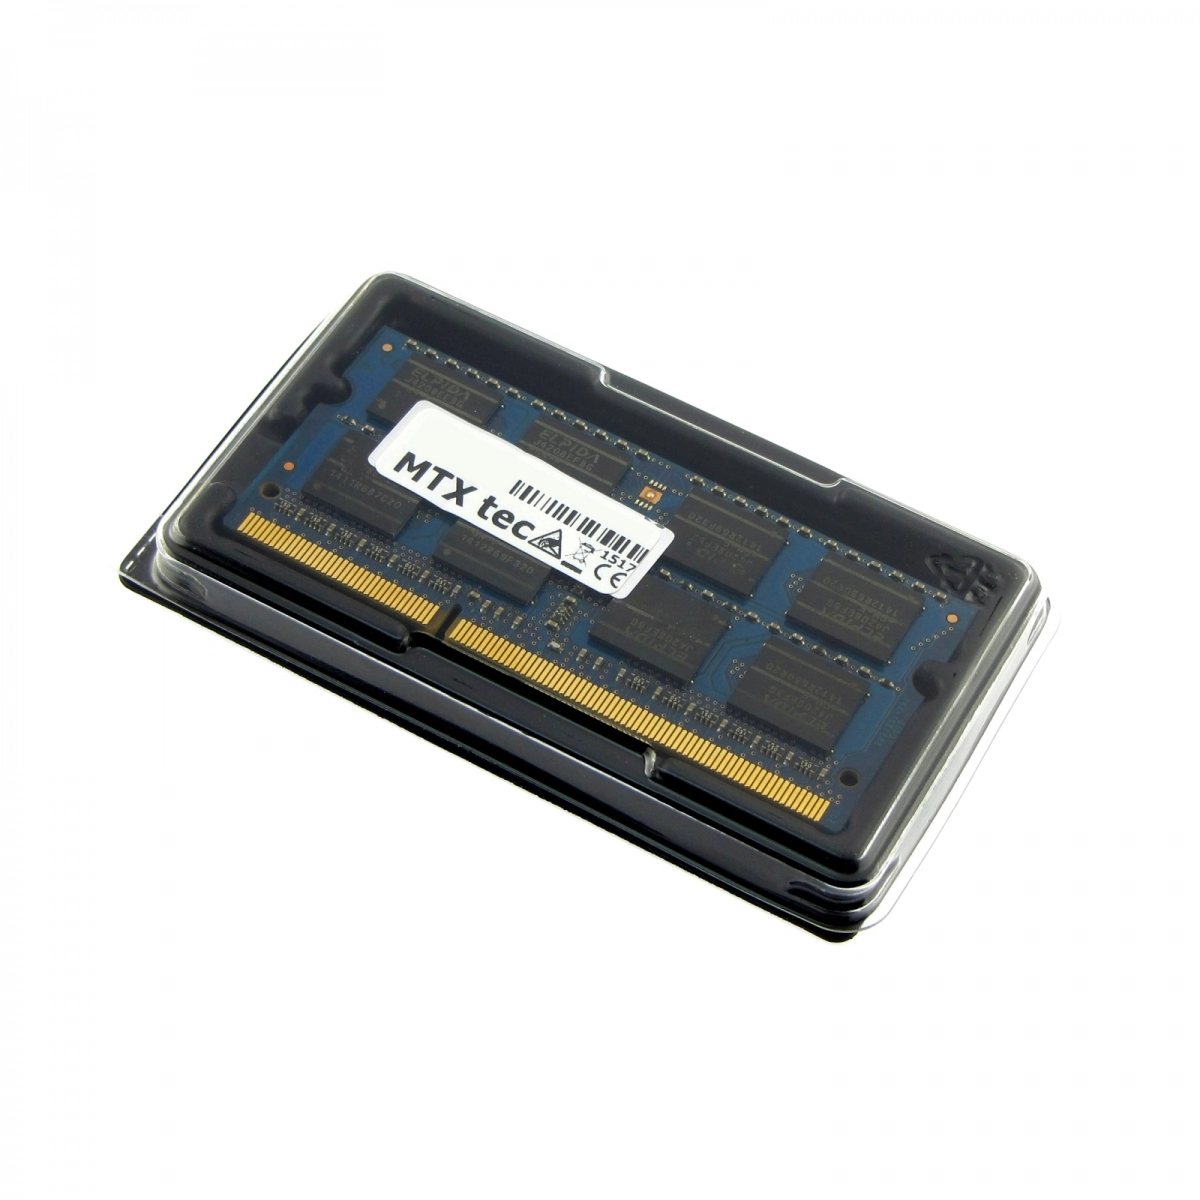 MTXtec Arbeitsspeicher 8 GB RAM für FUJITSU LifeBook E781